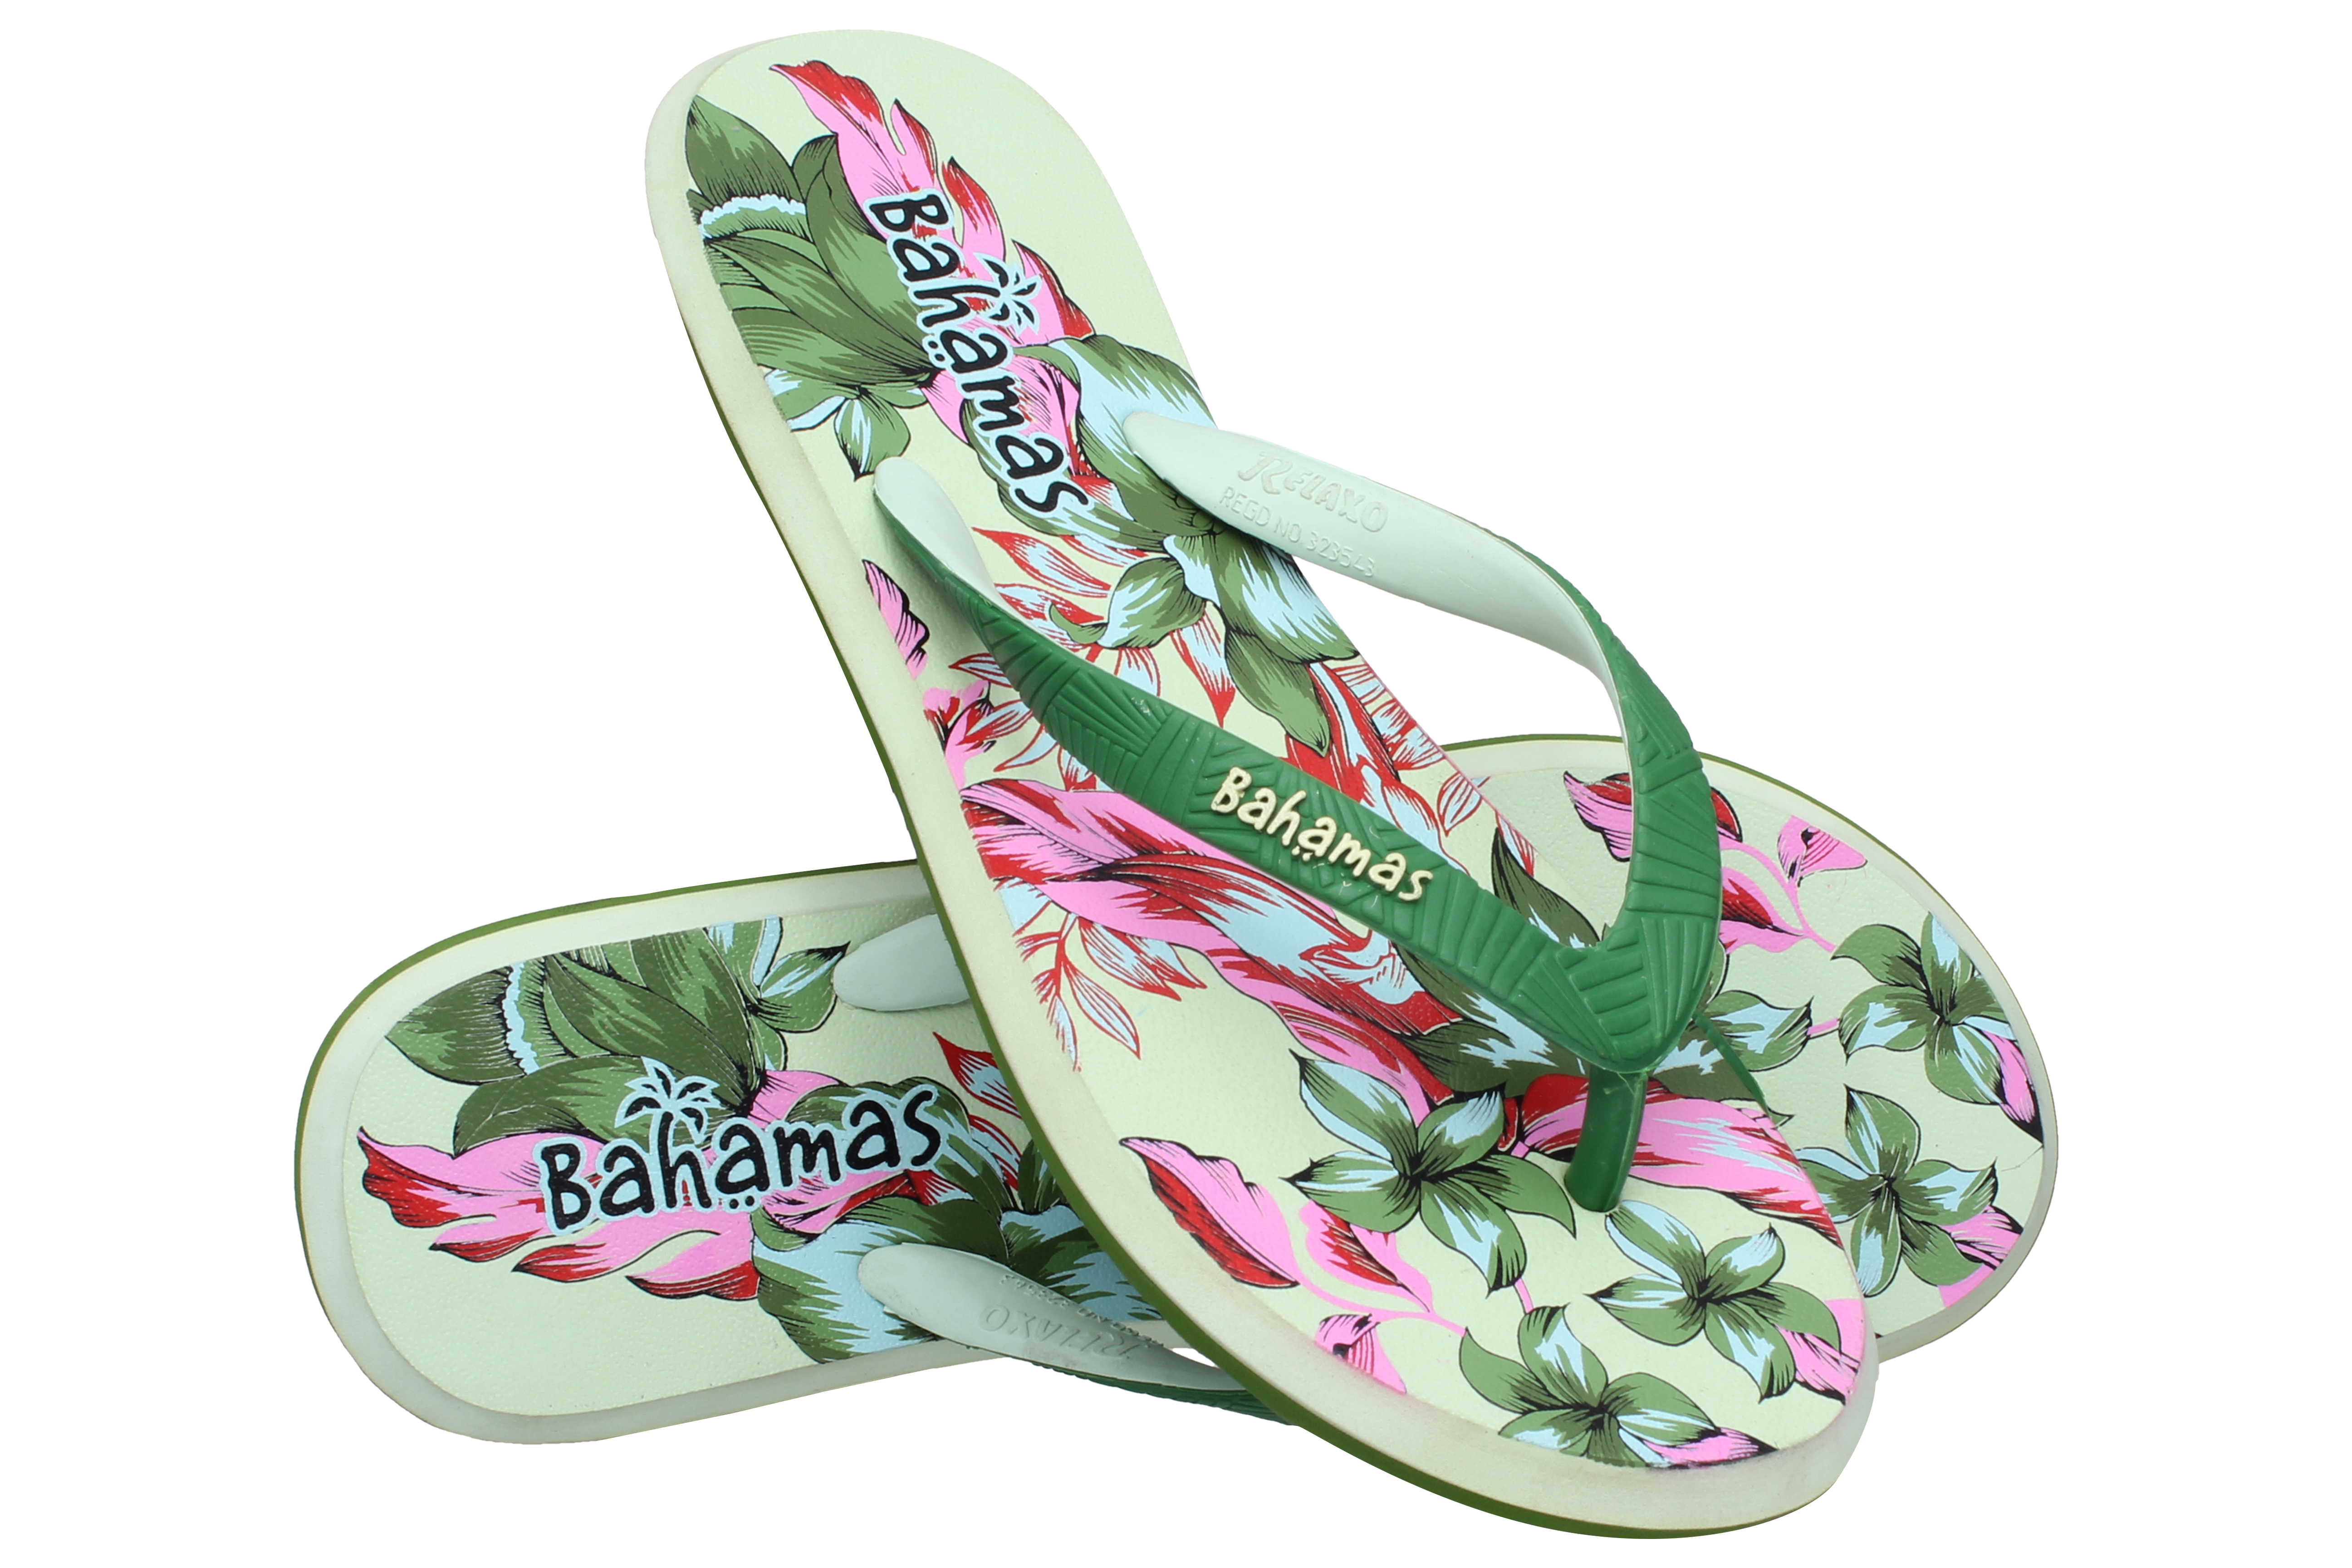 Bahamas Flip Flops for Men Sandals Slippers Beach Comfort Tropical Prints -  Walmart.com | Mens flip flops, Stylish flip flops, Black flip flops